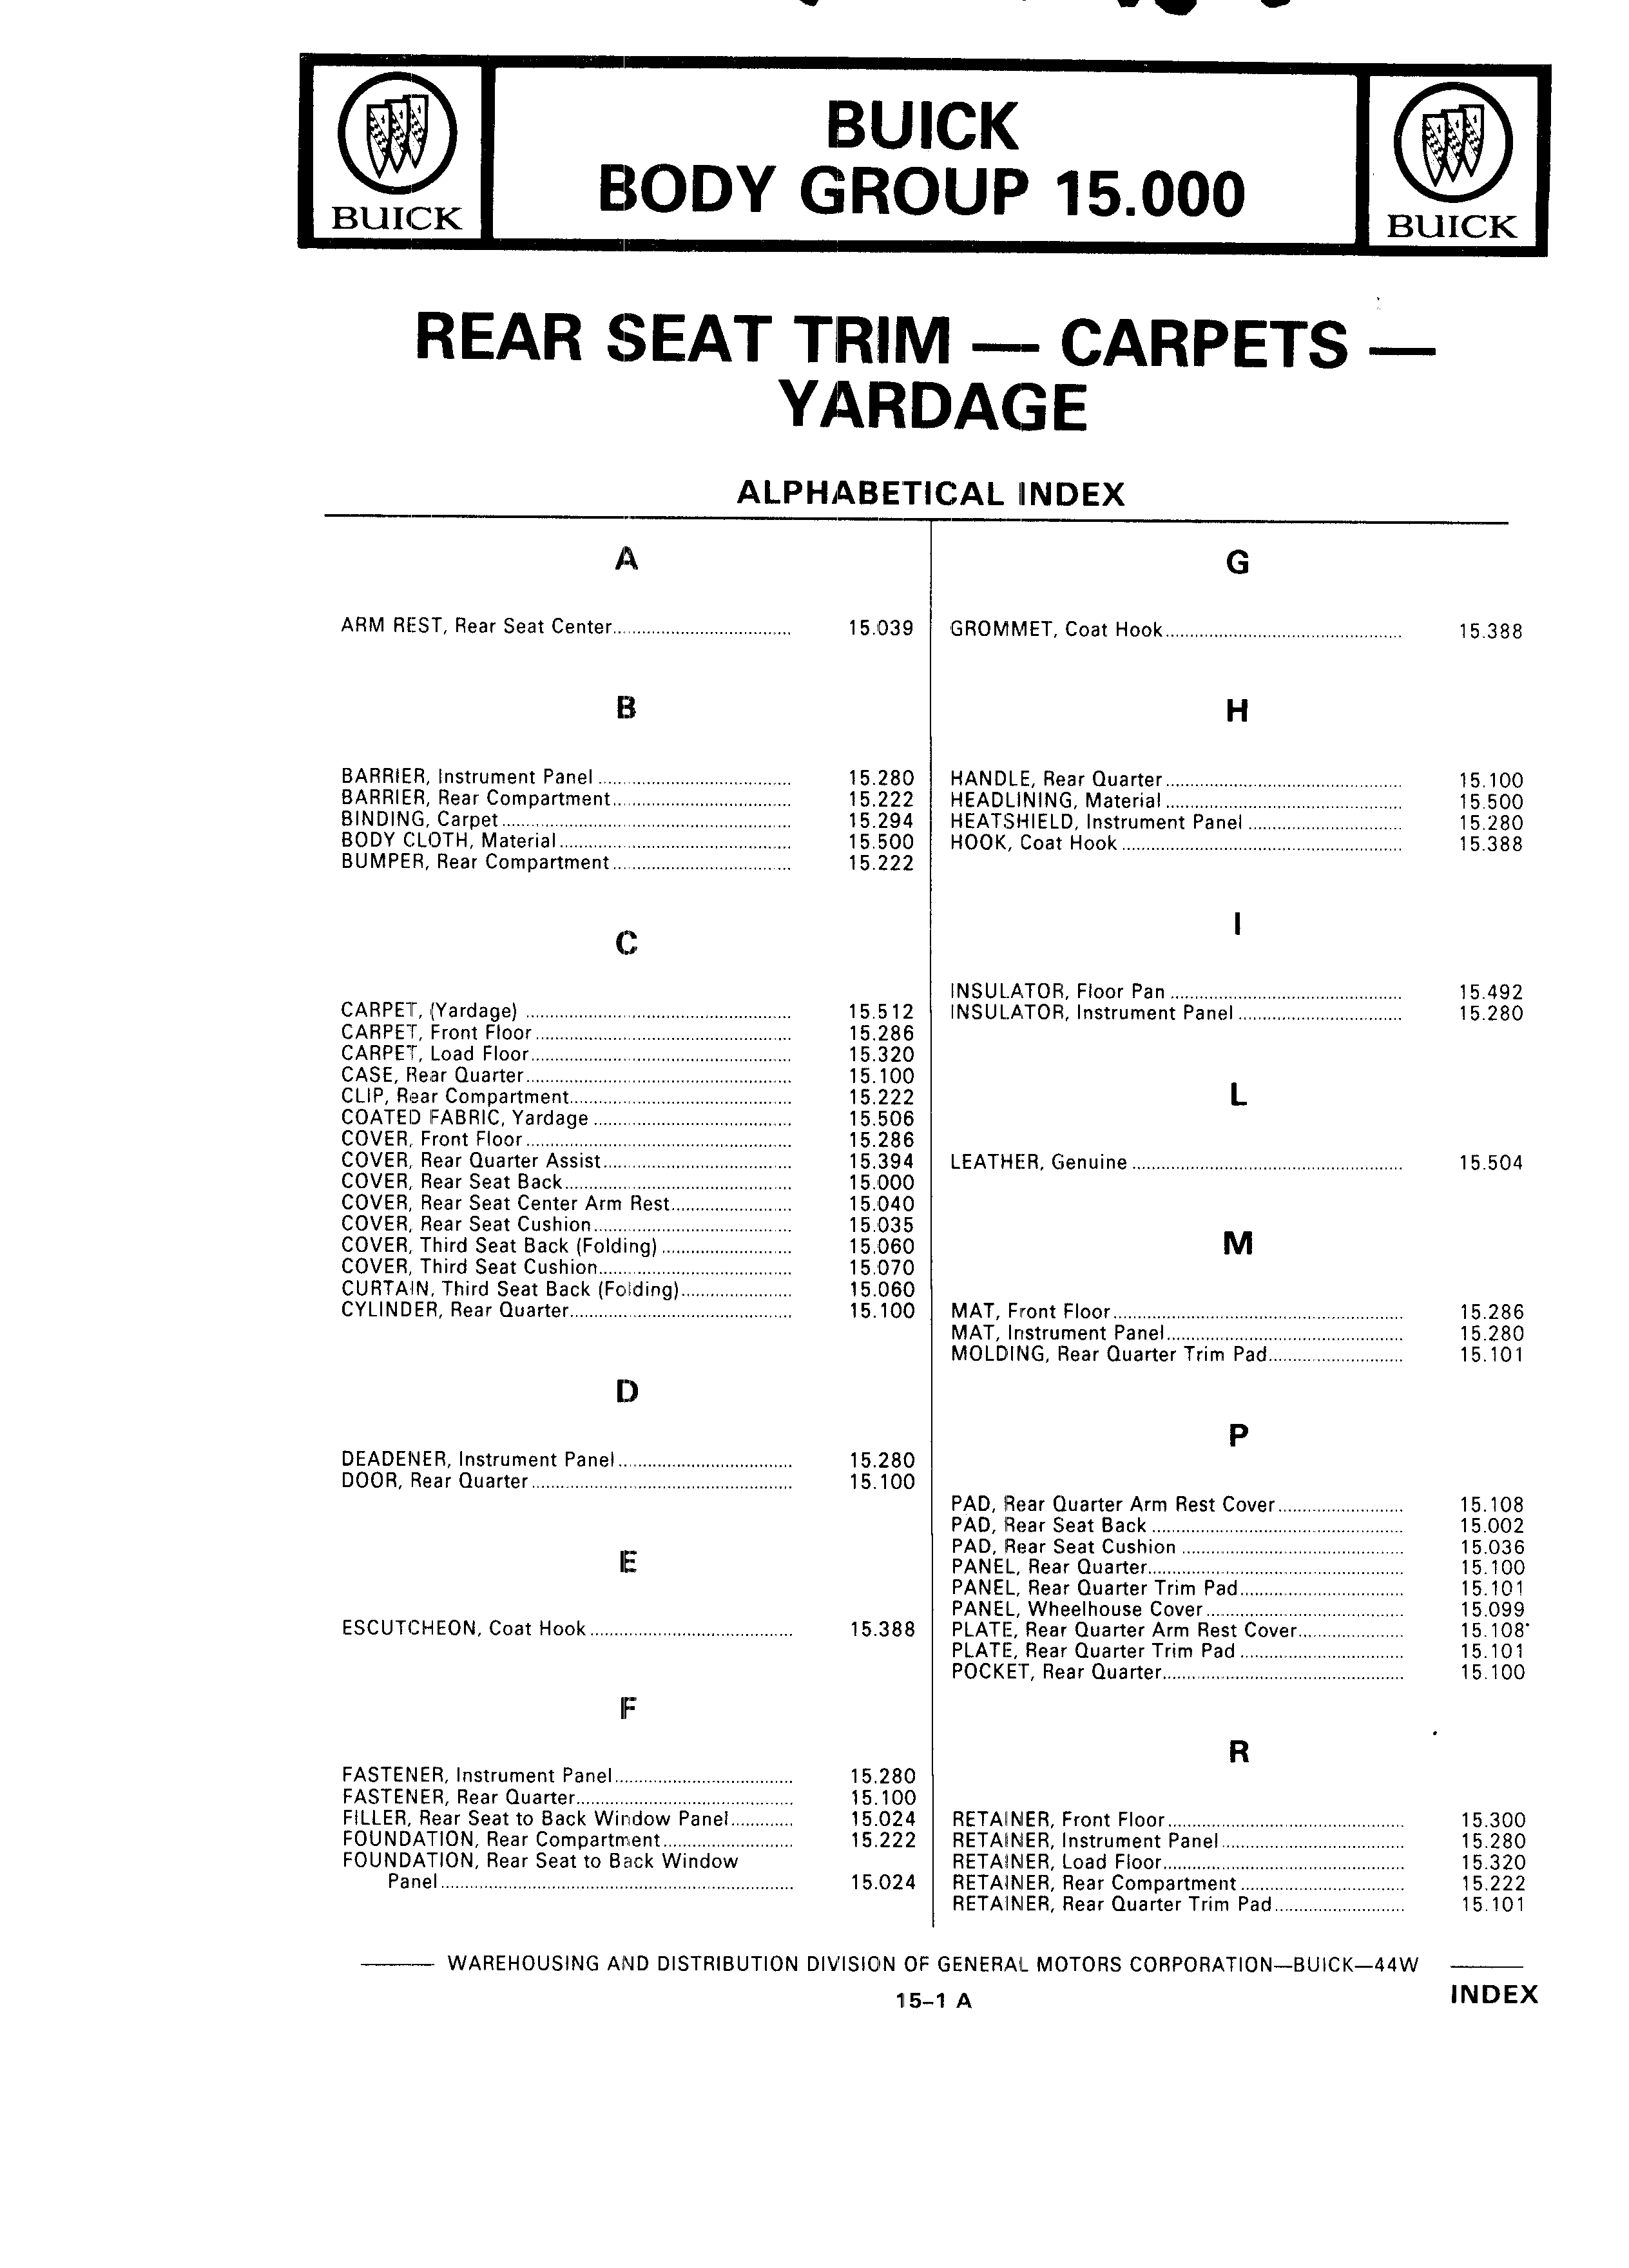 Parts and Illustration Catalog 44W January 1982